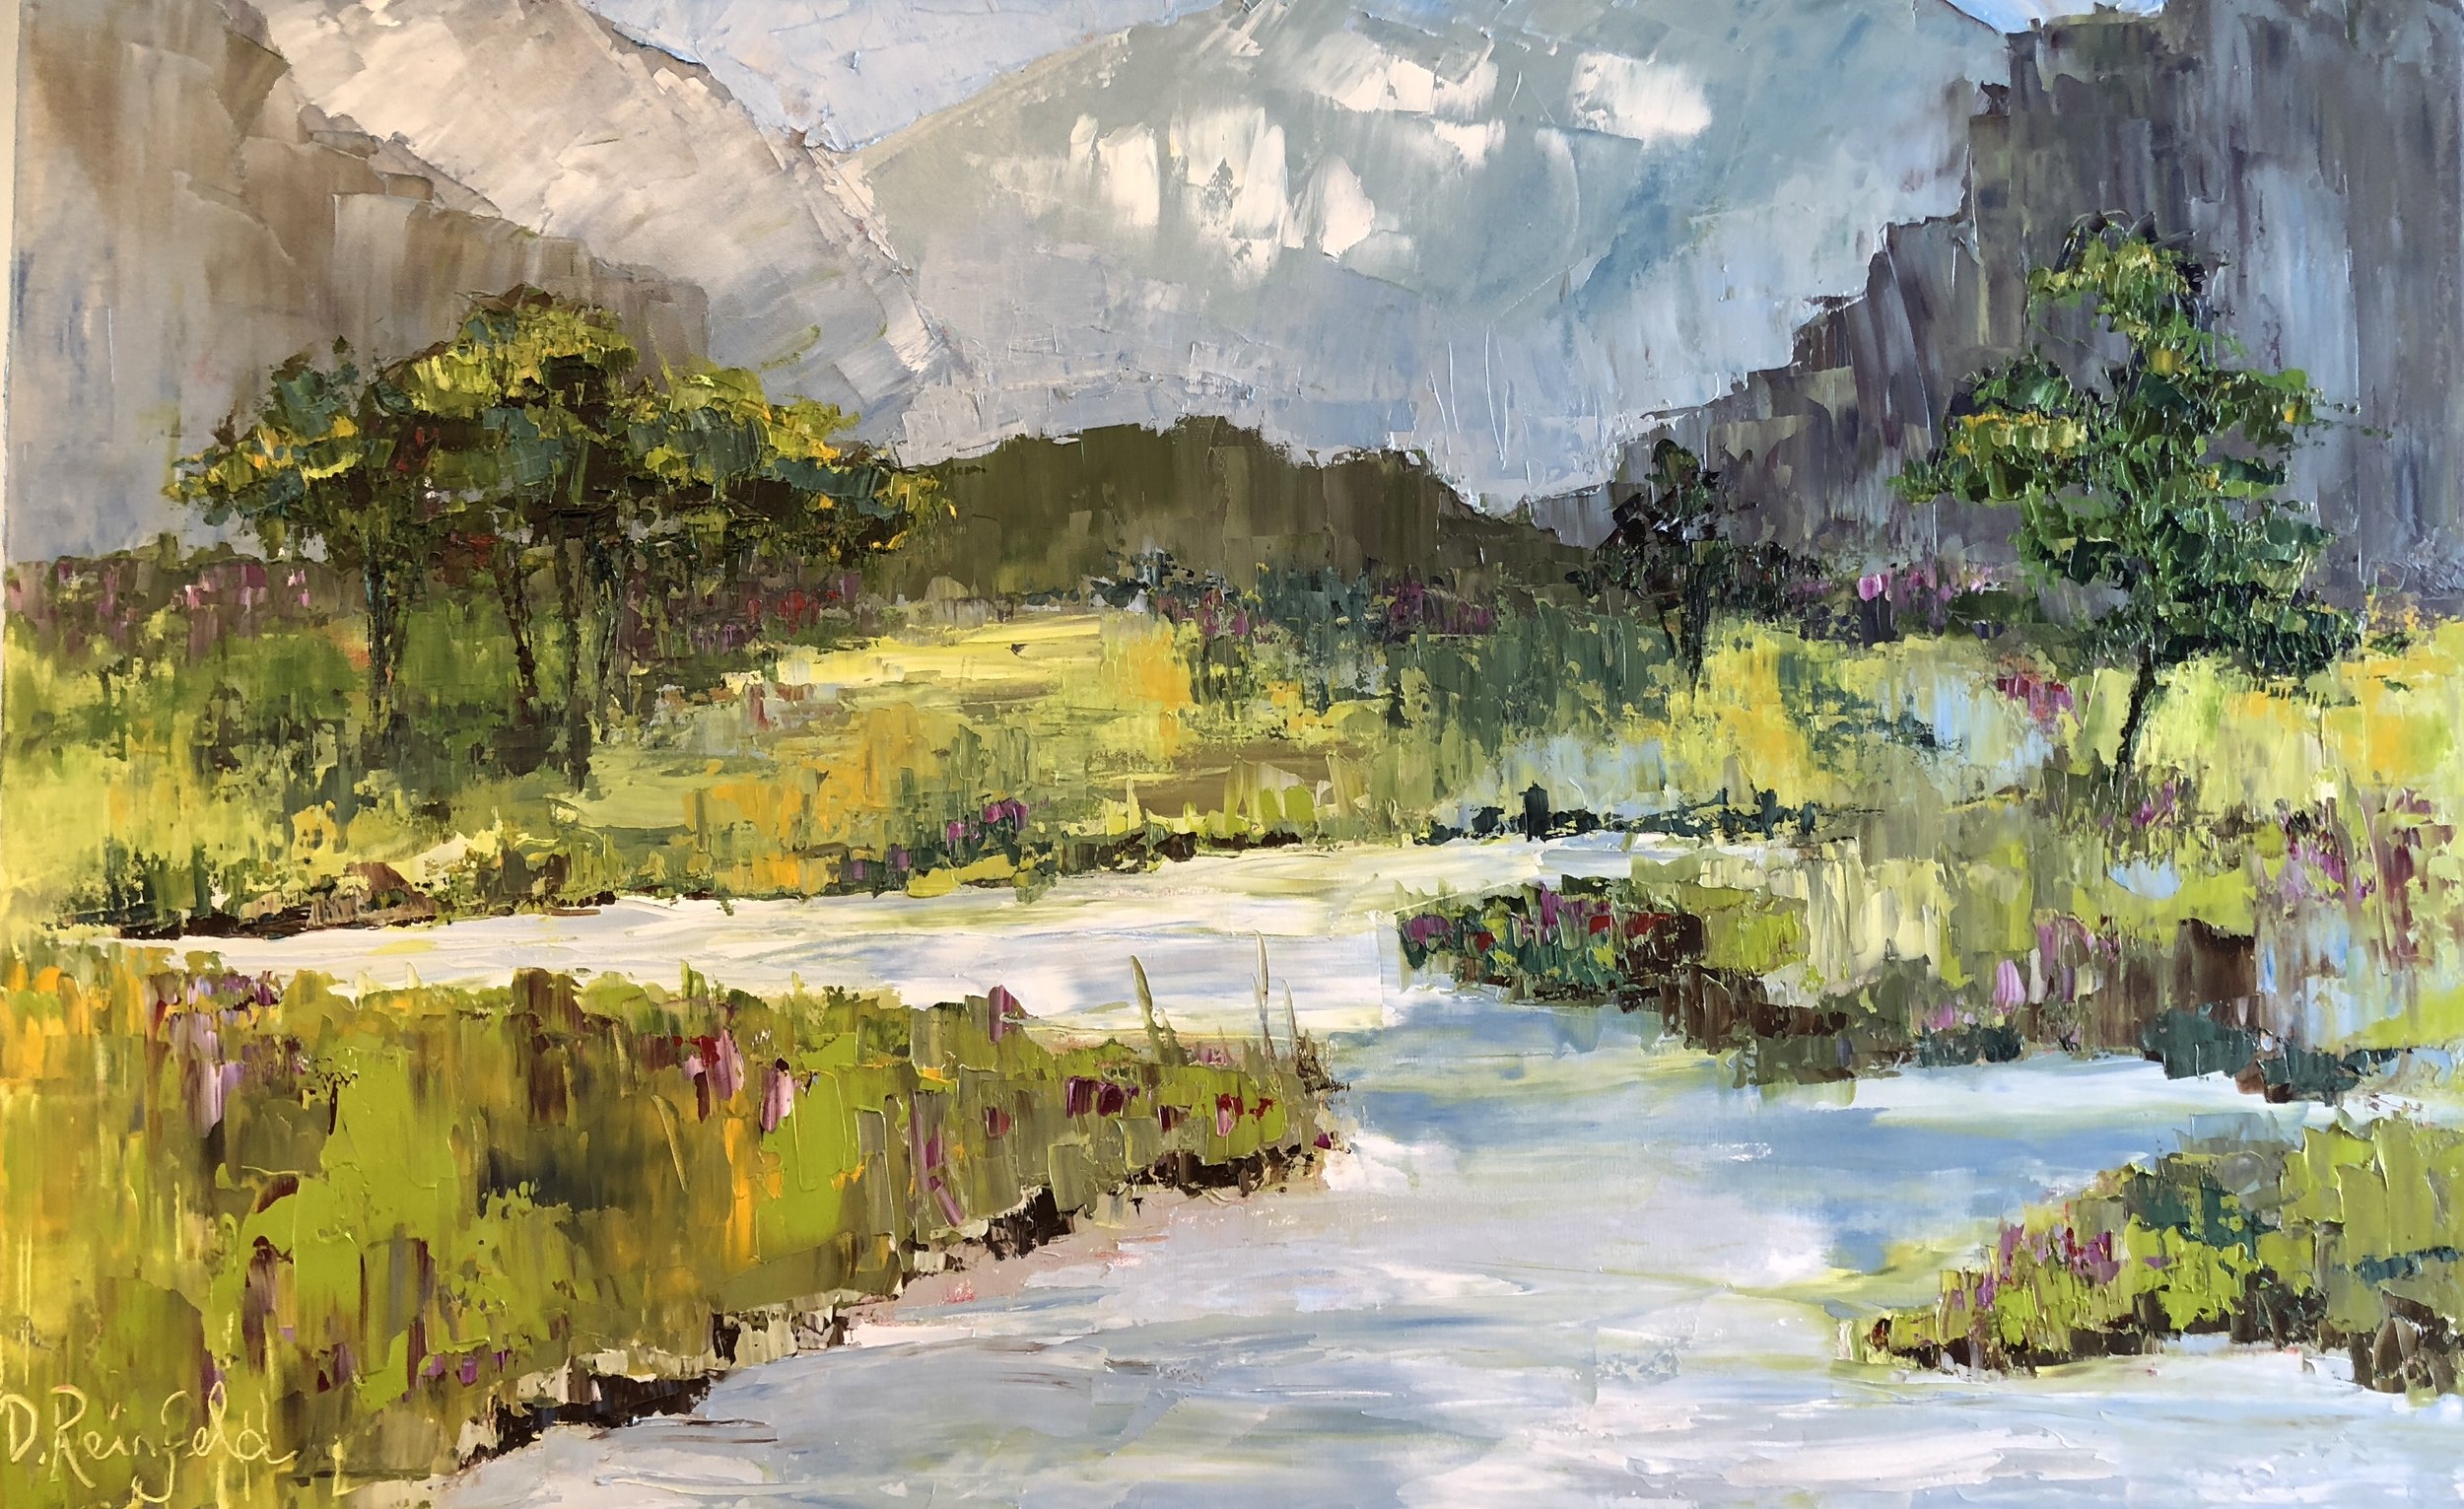 Rocky Mountain Heaven, oil on canvas, 30"x48" NFS